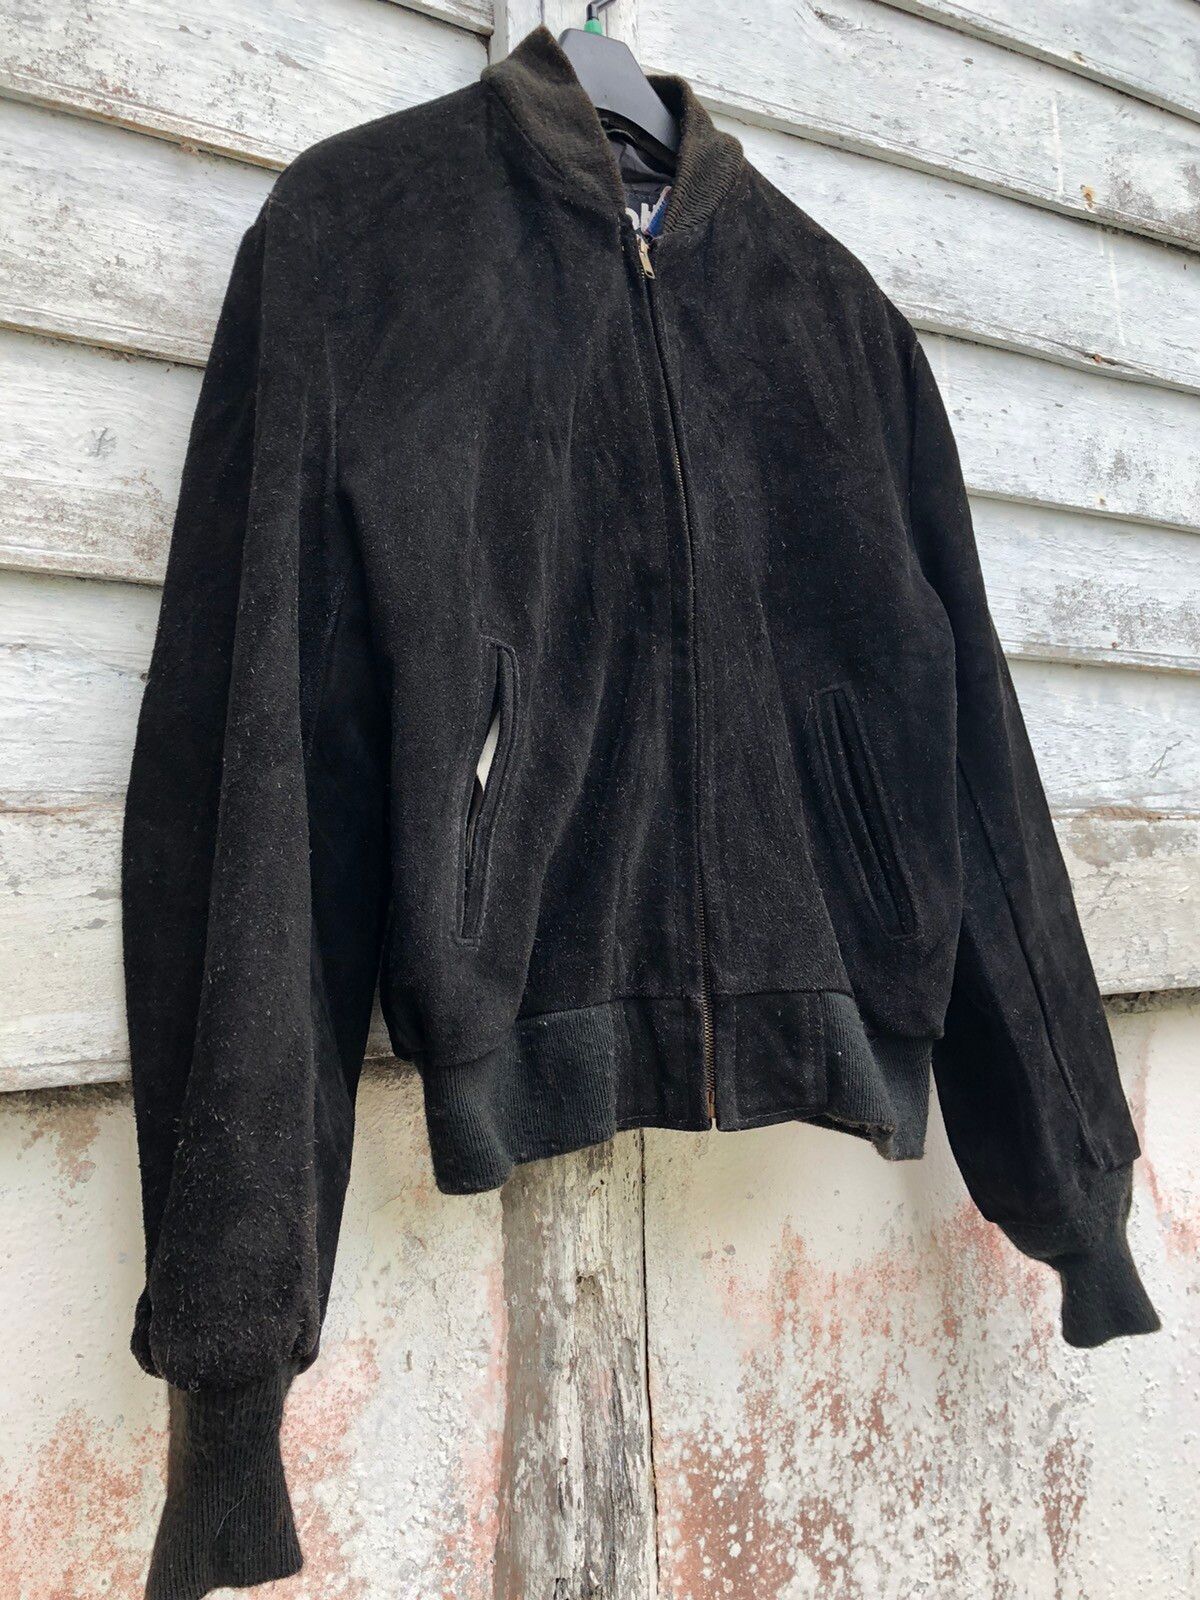 Vintage Schott Black Suede Leather Jacket - 3